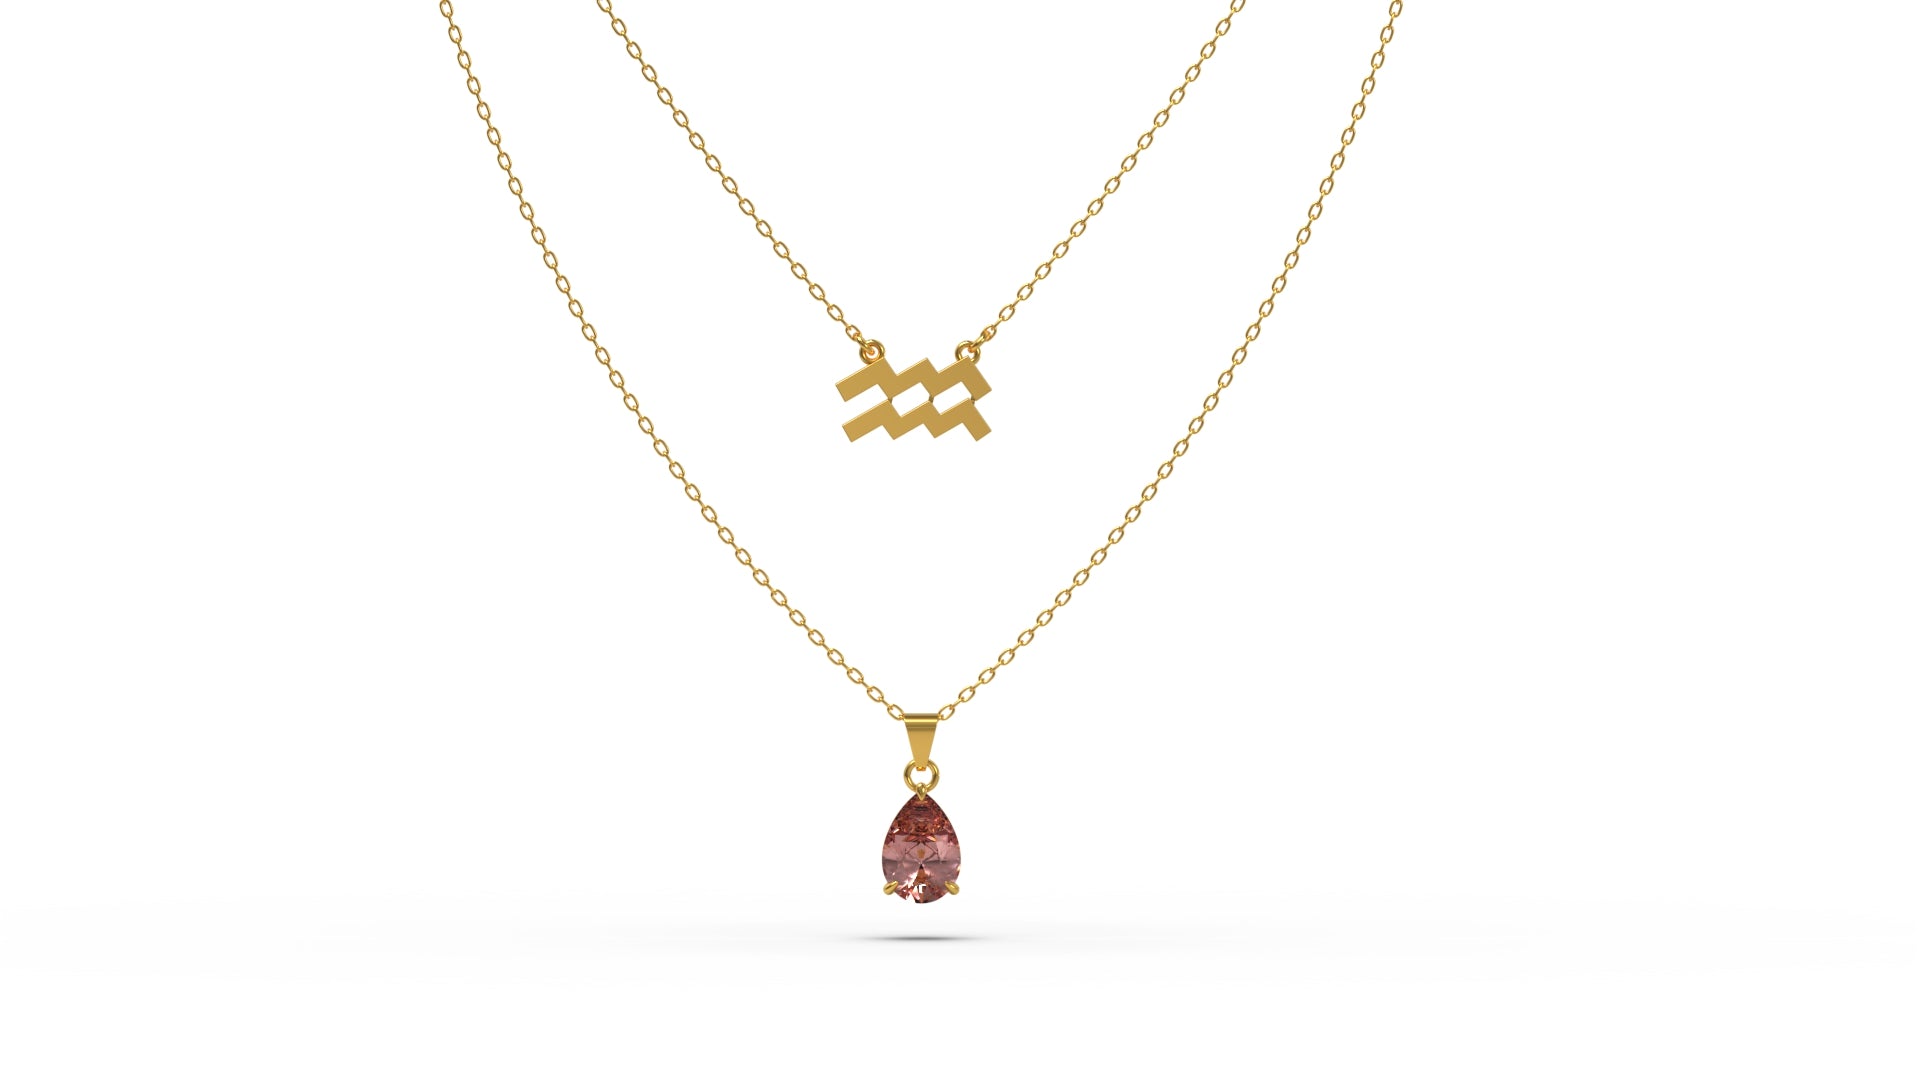 zodiac sign necklace- aquarius- gold